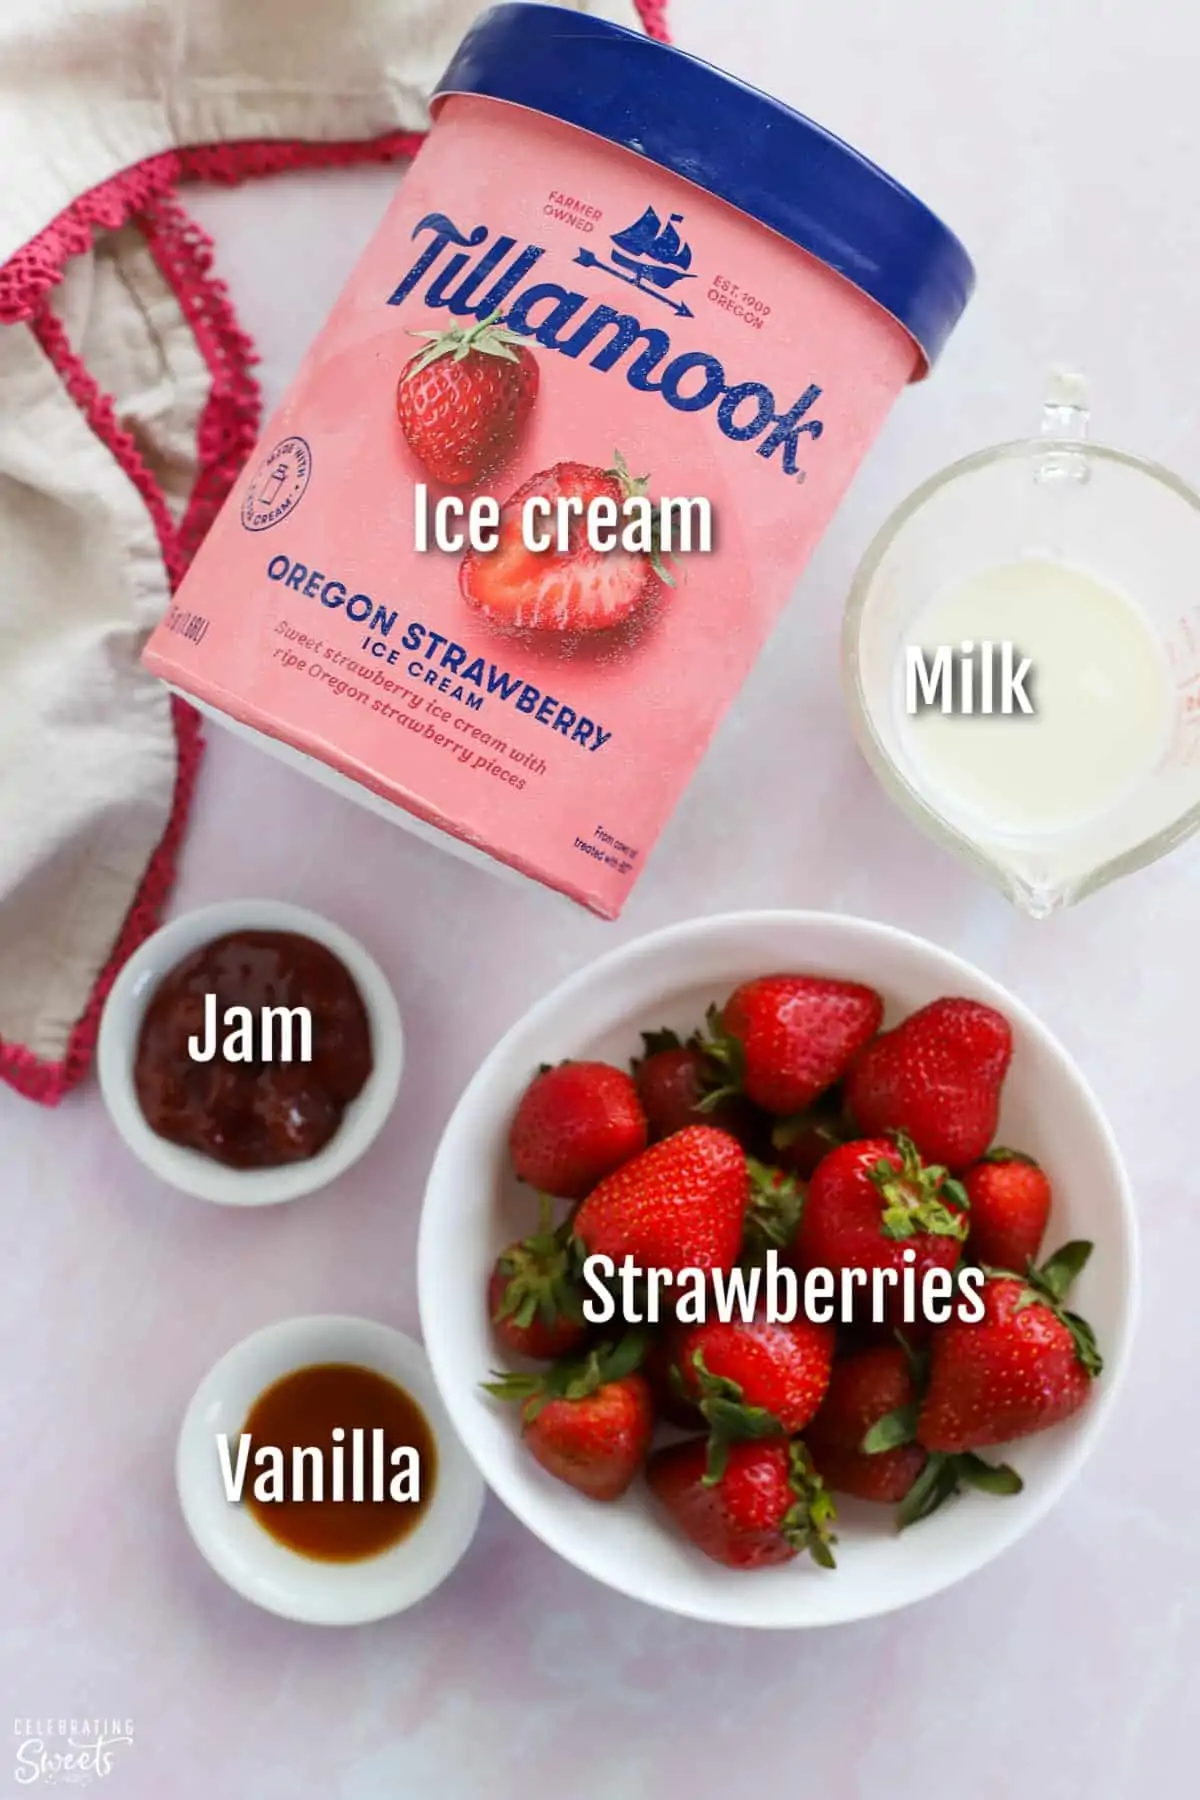 Ingredients for strawberry milkshake: ice cream, milk, strawberries, vanilla, jam.